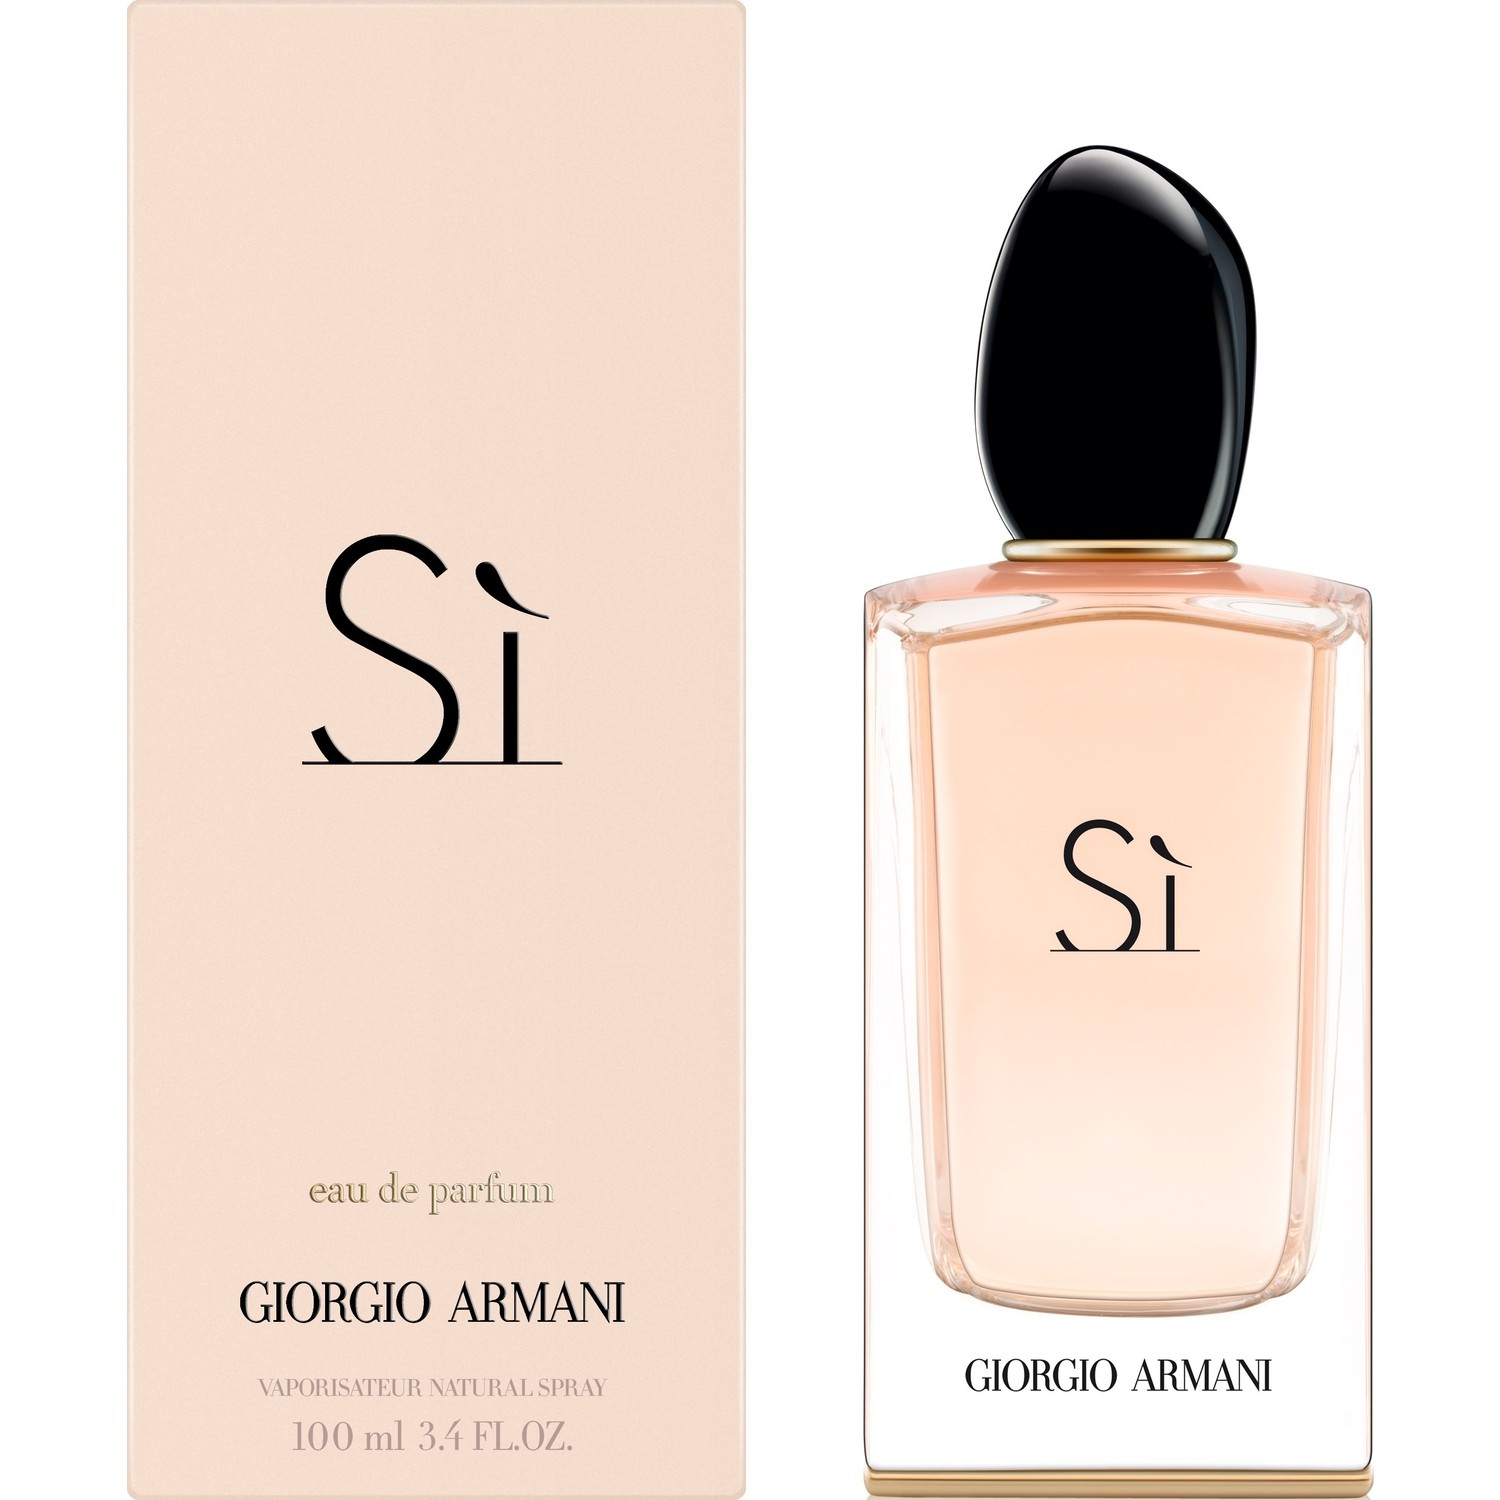 Giorgio Armani Si Edp 100 Ml Kadın Parfümü Fiyatı